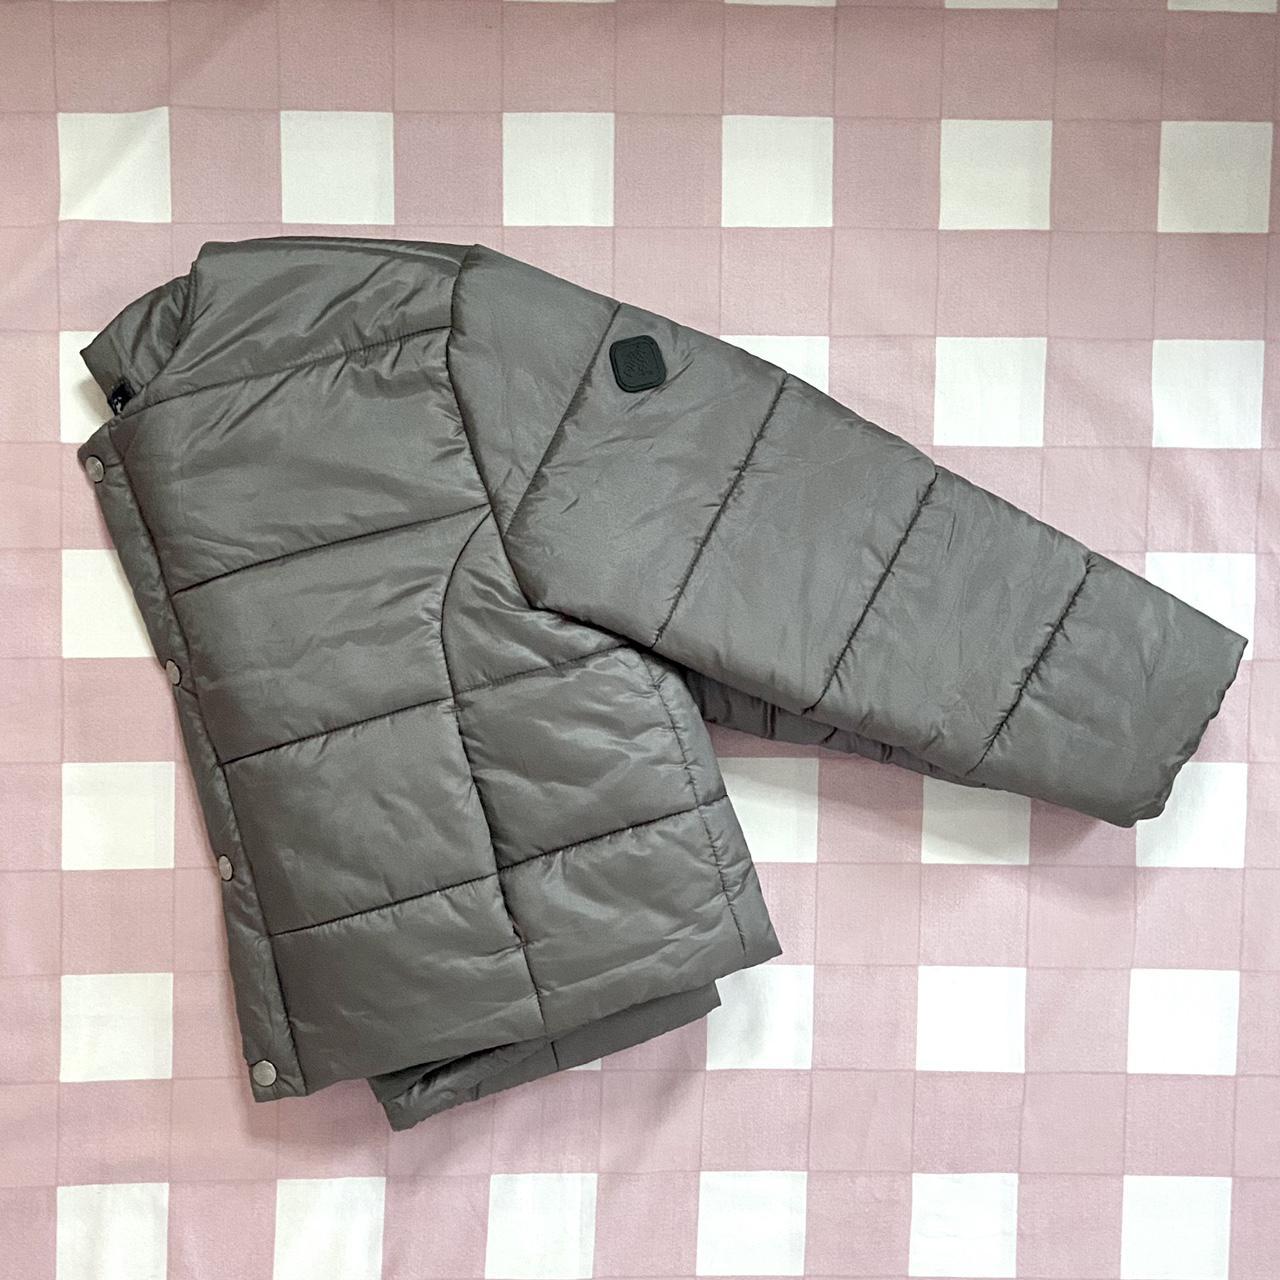 Product Image 4 - grey puffa brand jacket ❄️☁️🌨

✿